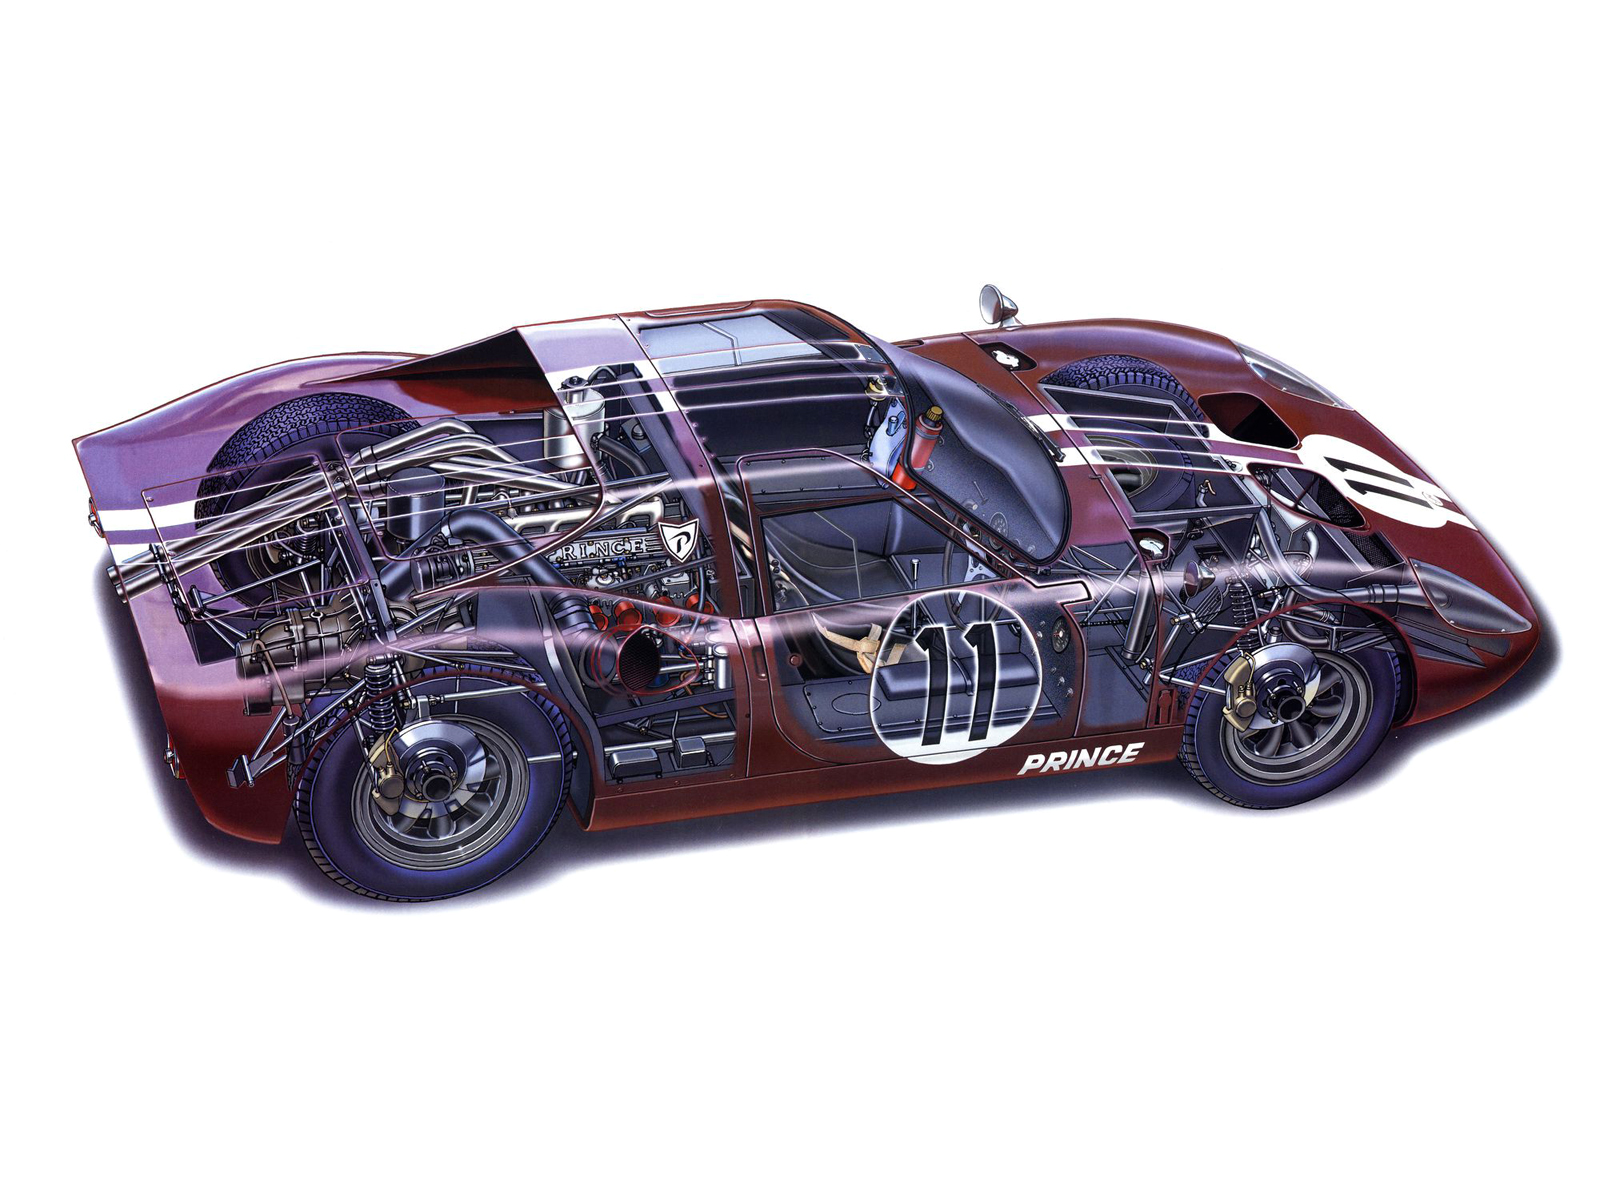 1965, Prince, R380 i, Race, Racing, Supercar, Supercars, Interior, Engine, Engines Wallpaper